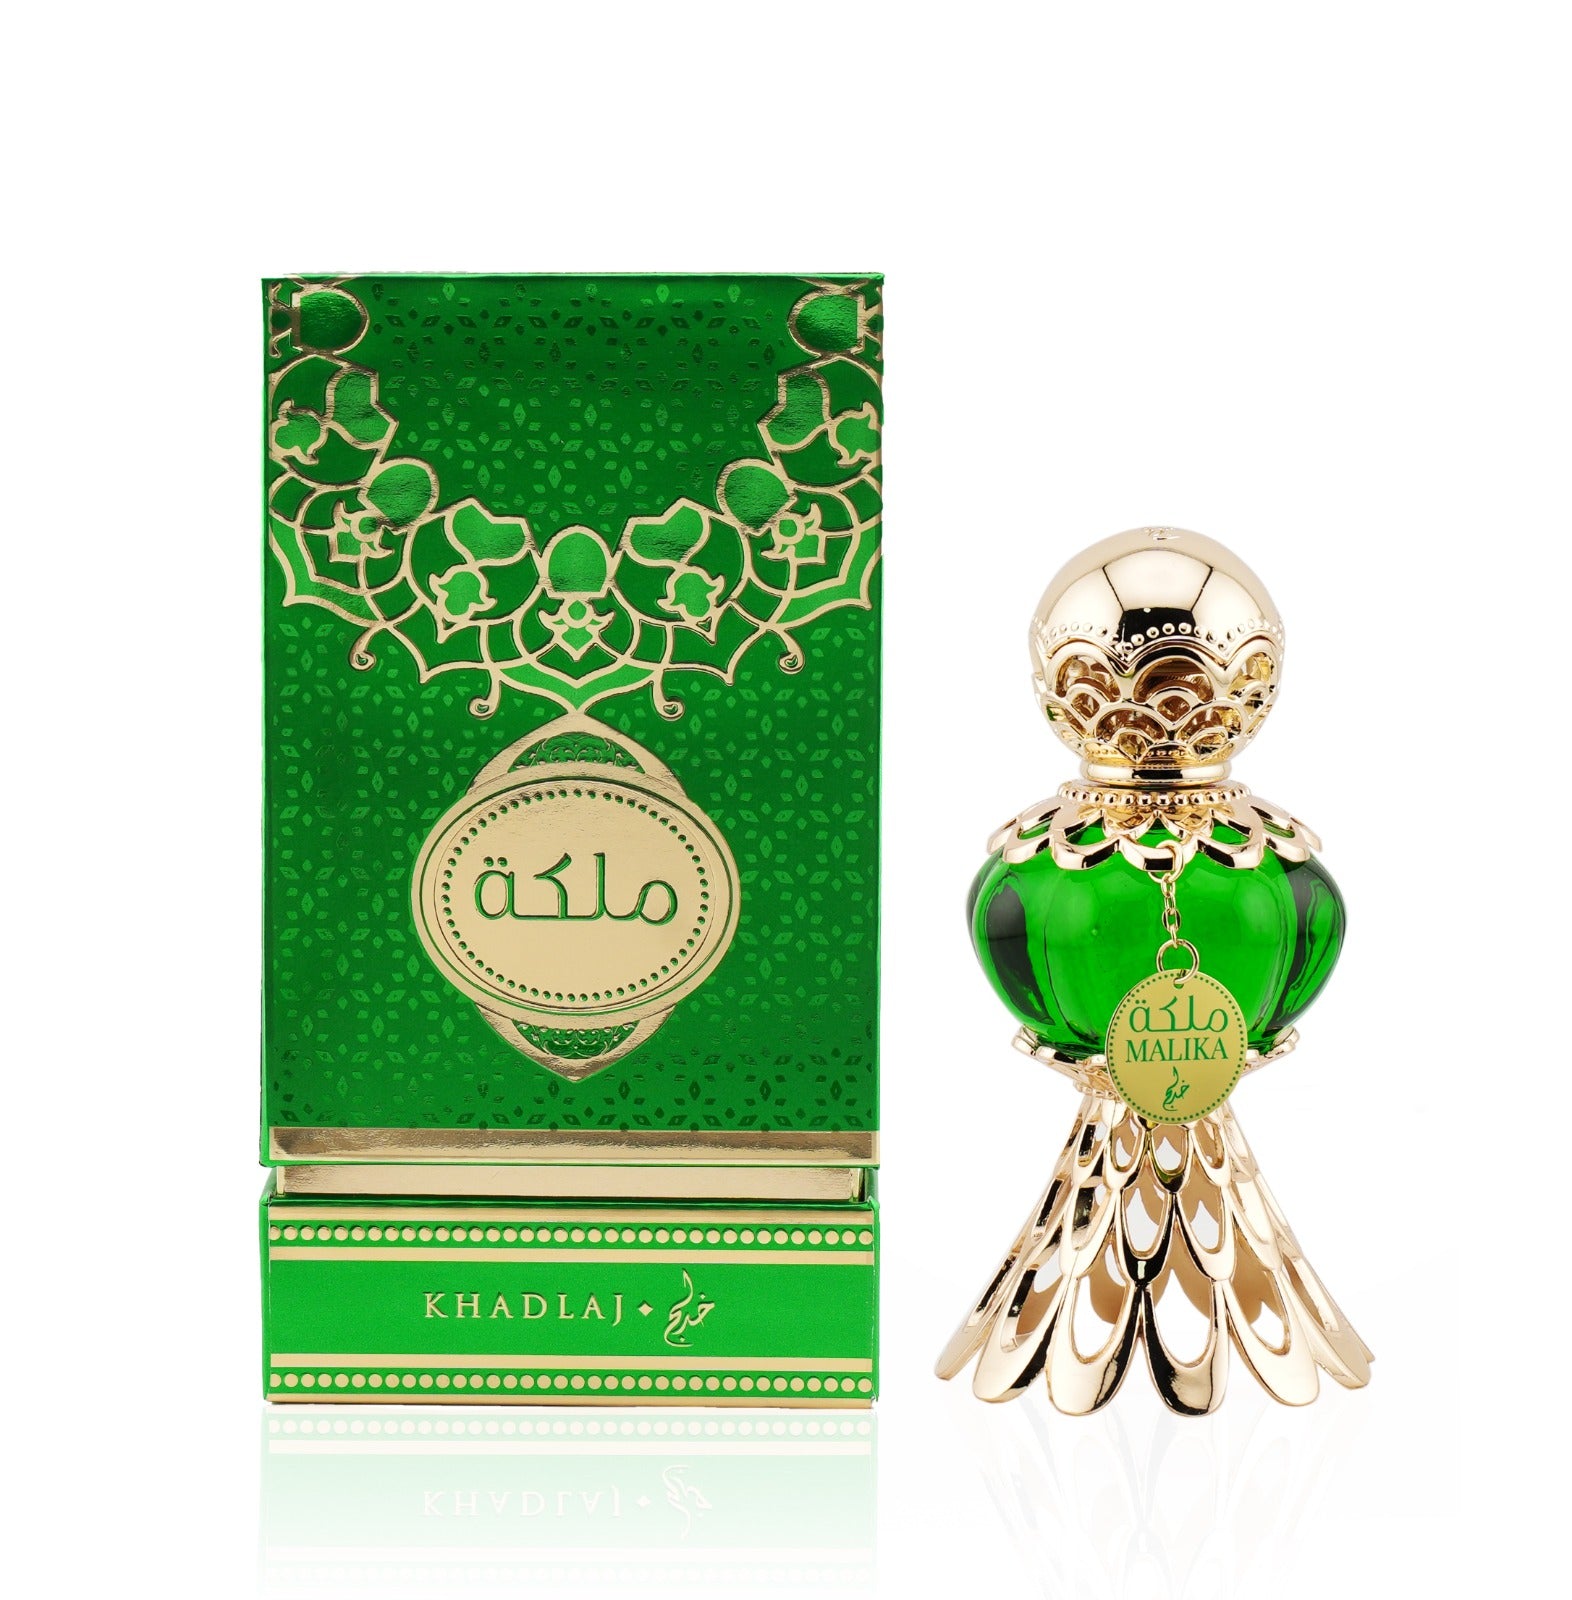 Hadlaj Malika Green oil парфюм для женщин 15 мл